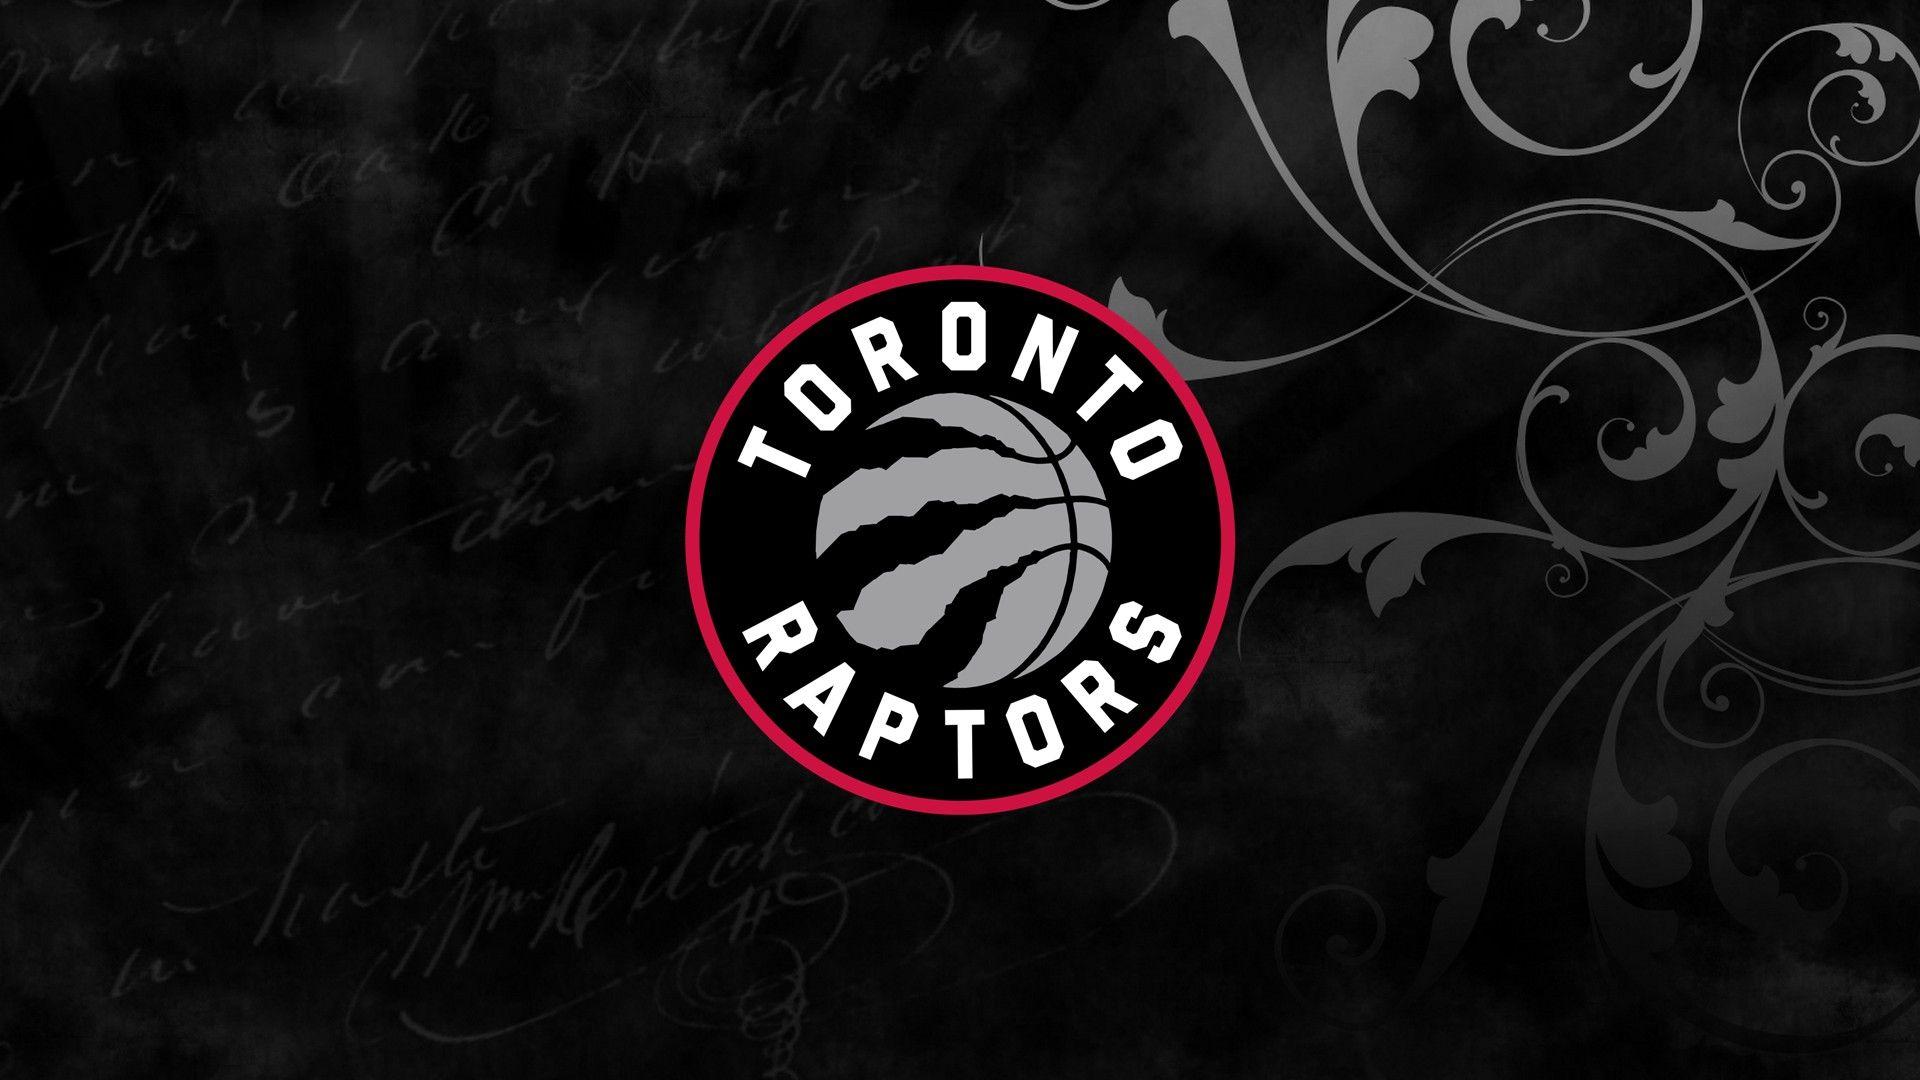 NBA Raptors Desktop Wallpaper. Basketball wallpaper hd, Raptors